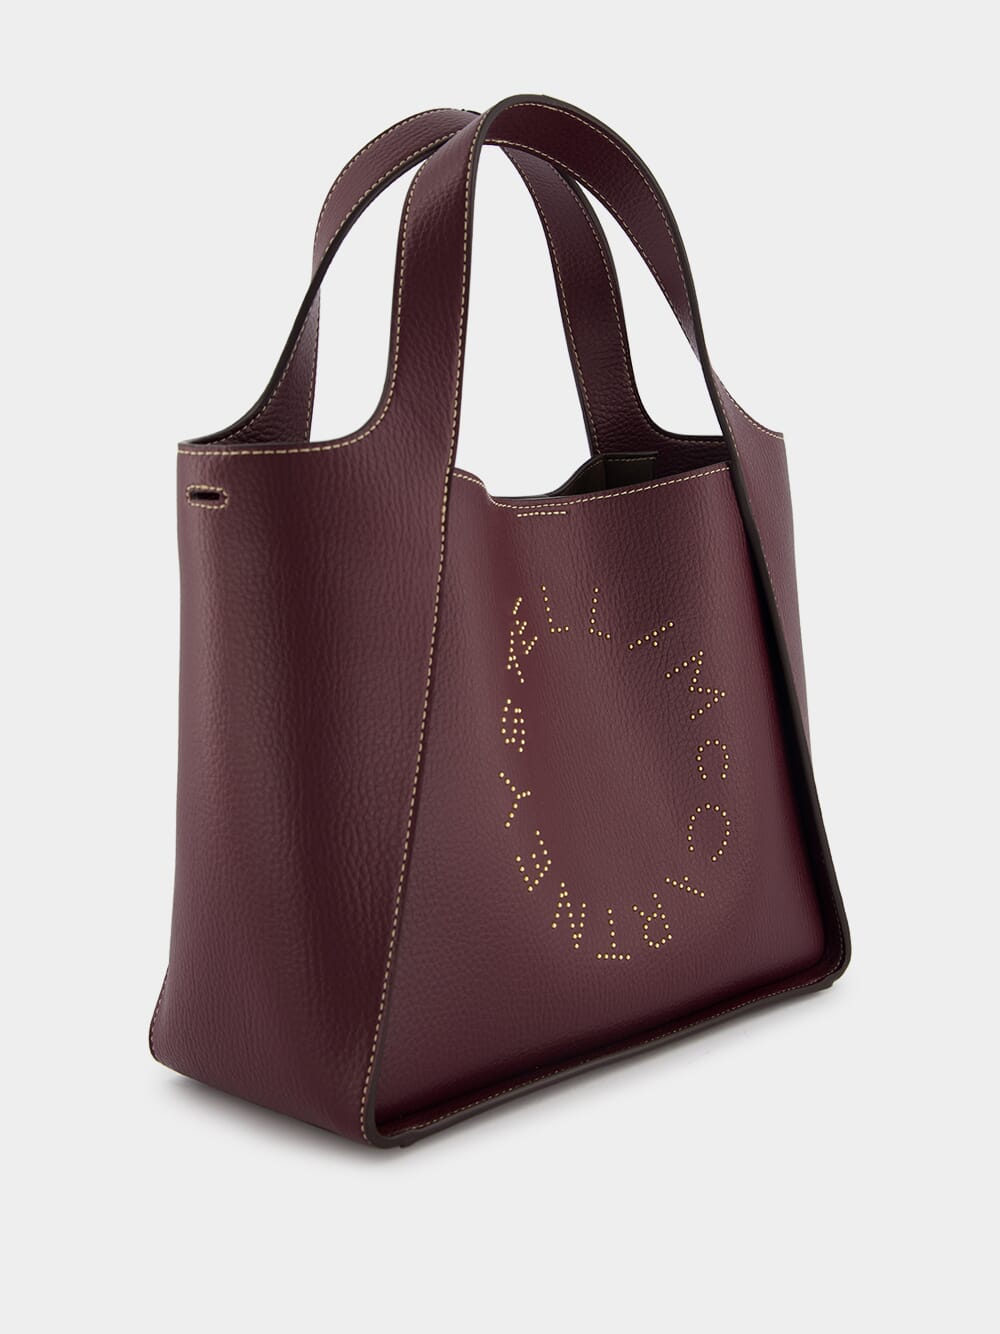 Stella McCartneyLogo Embellished Tote Bag at Fashion Clinic